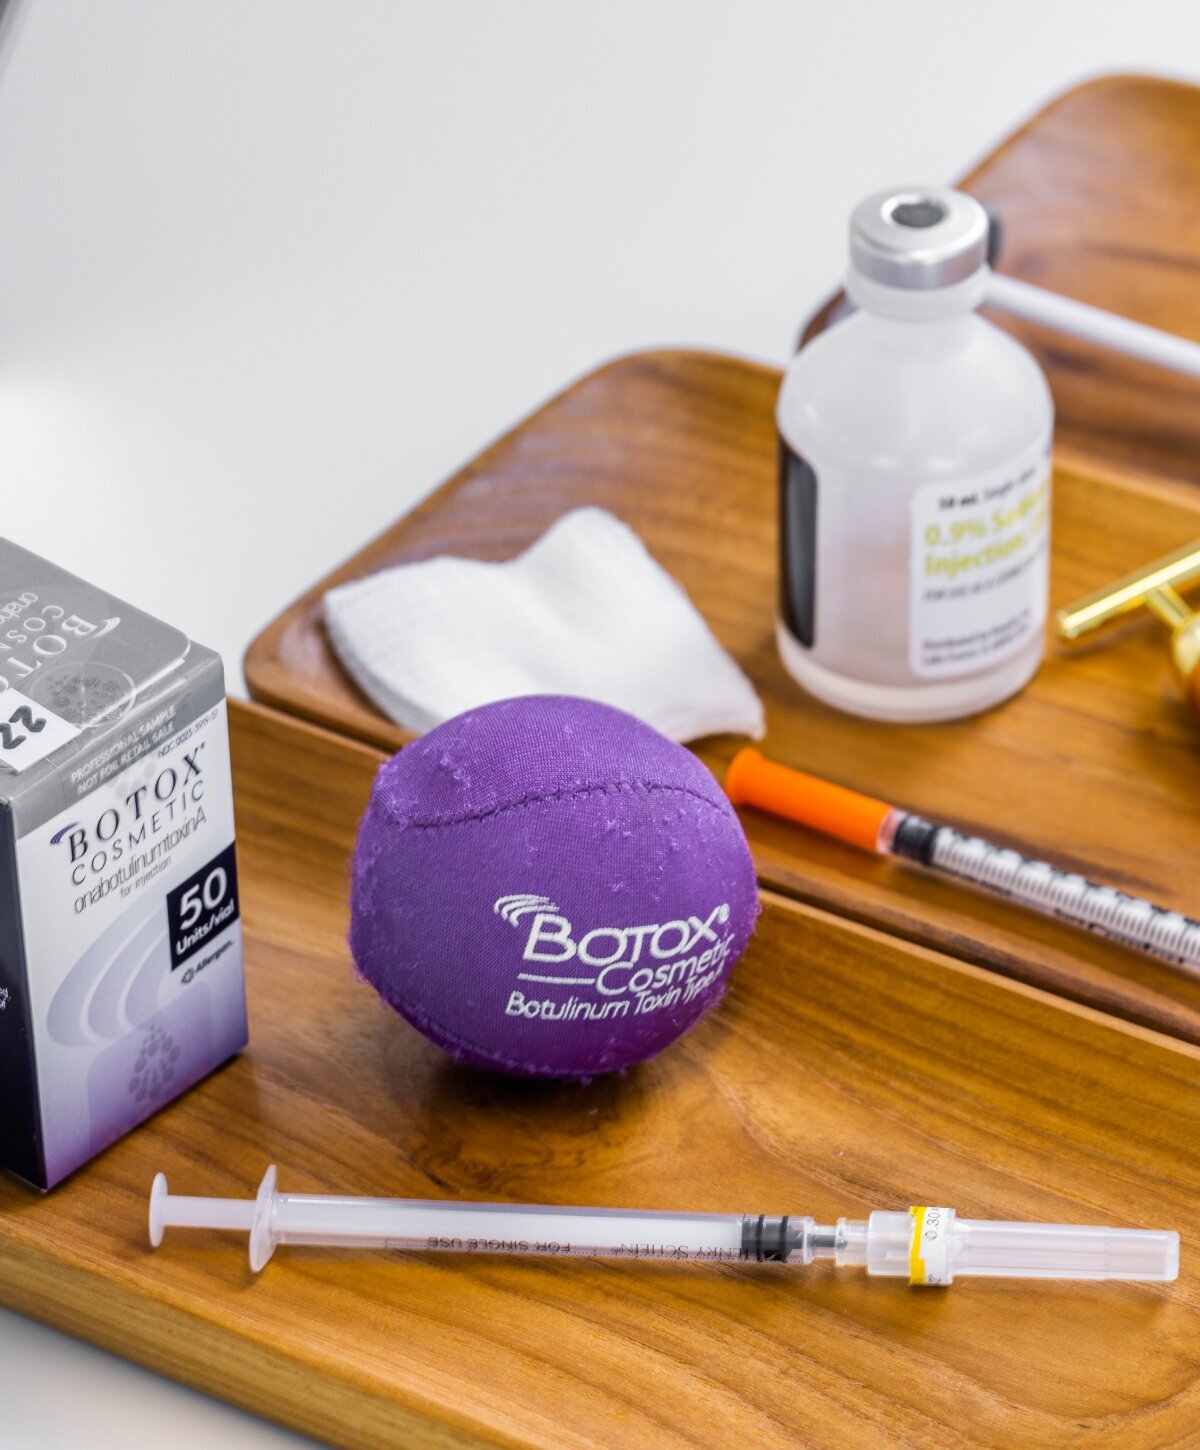 Boca Raton Botox injection kit